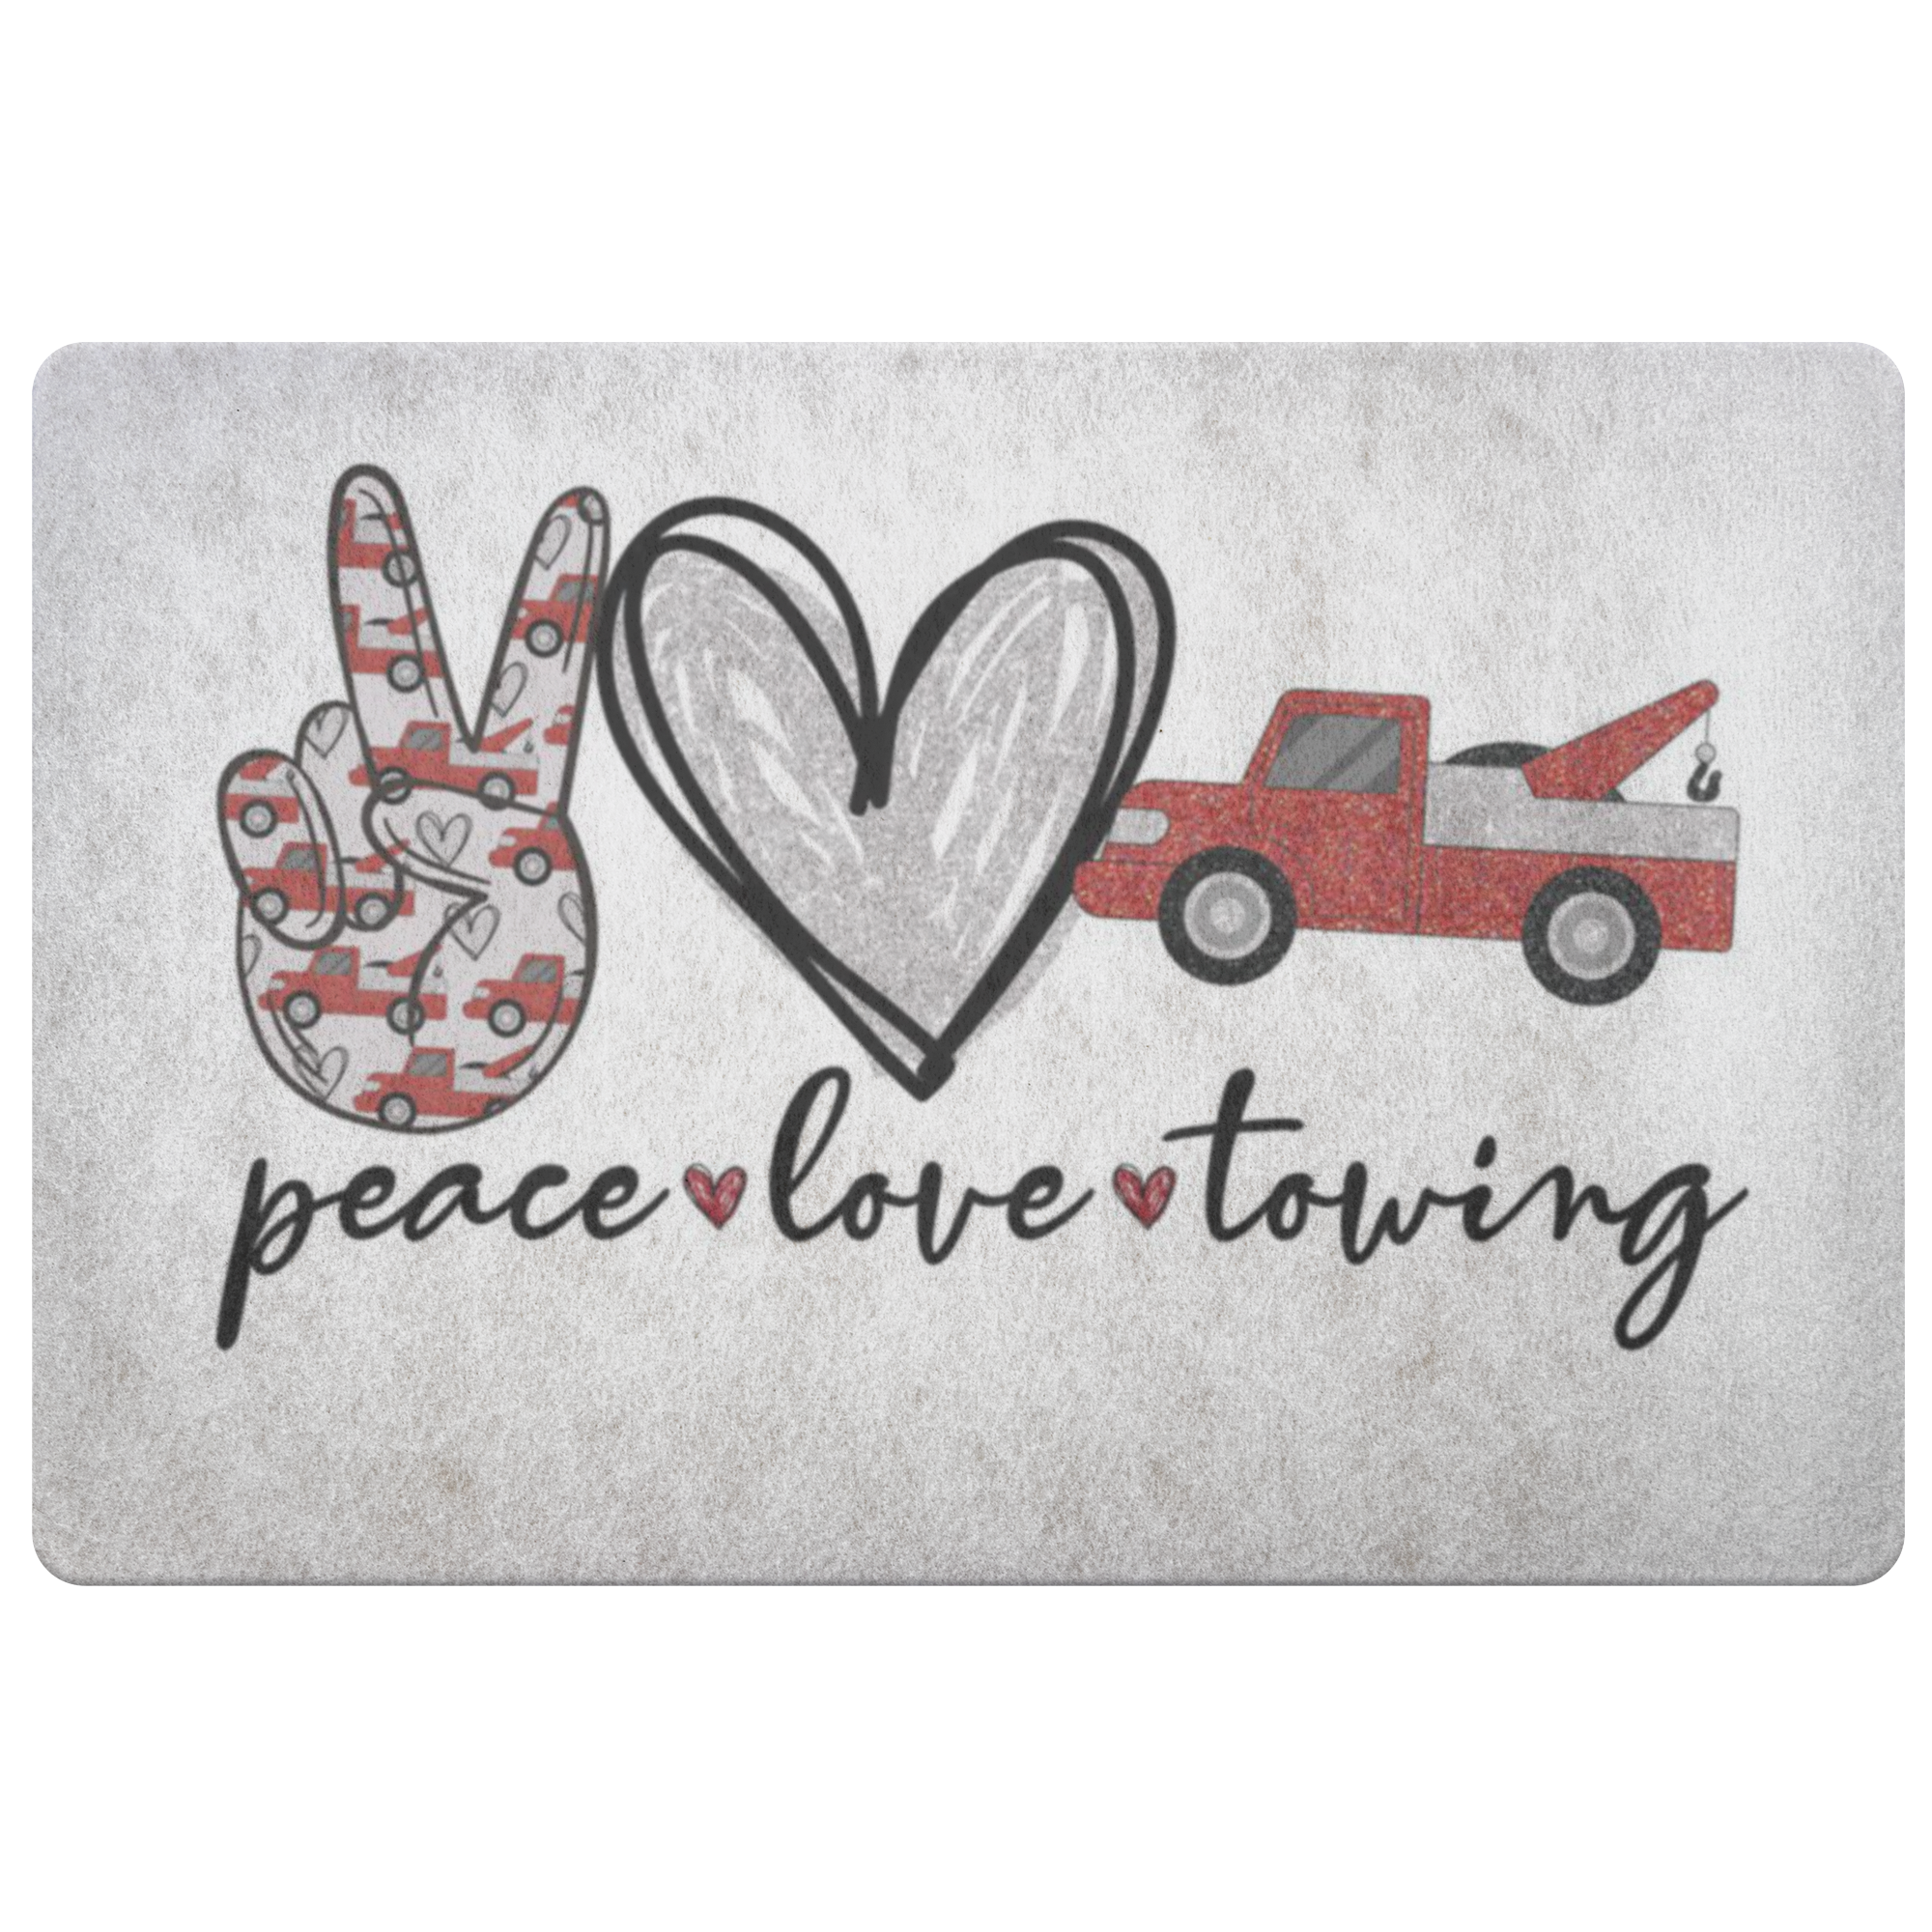 Download Peace Love Towign Doormat Towlivesmatter